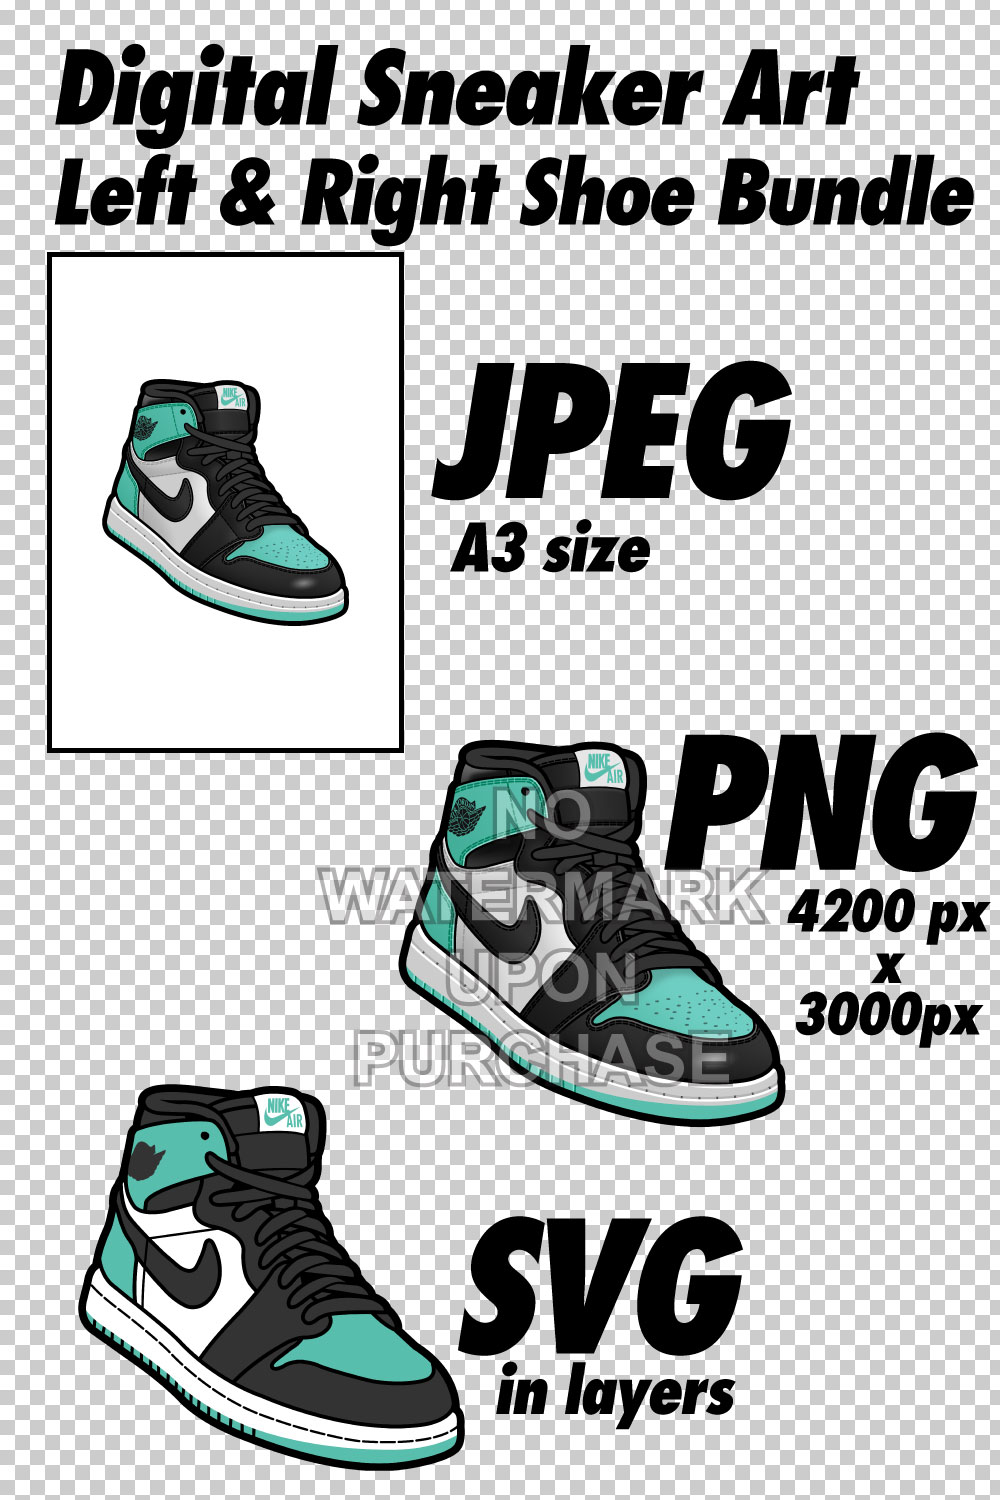 Air Jordan 1 Green Glow JPEG PNG SVG right & left shoe bundle pinterest preview image.